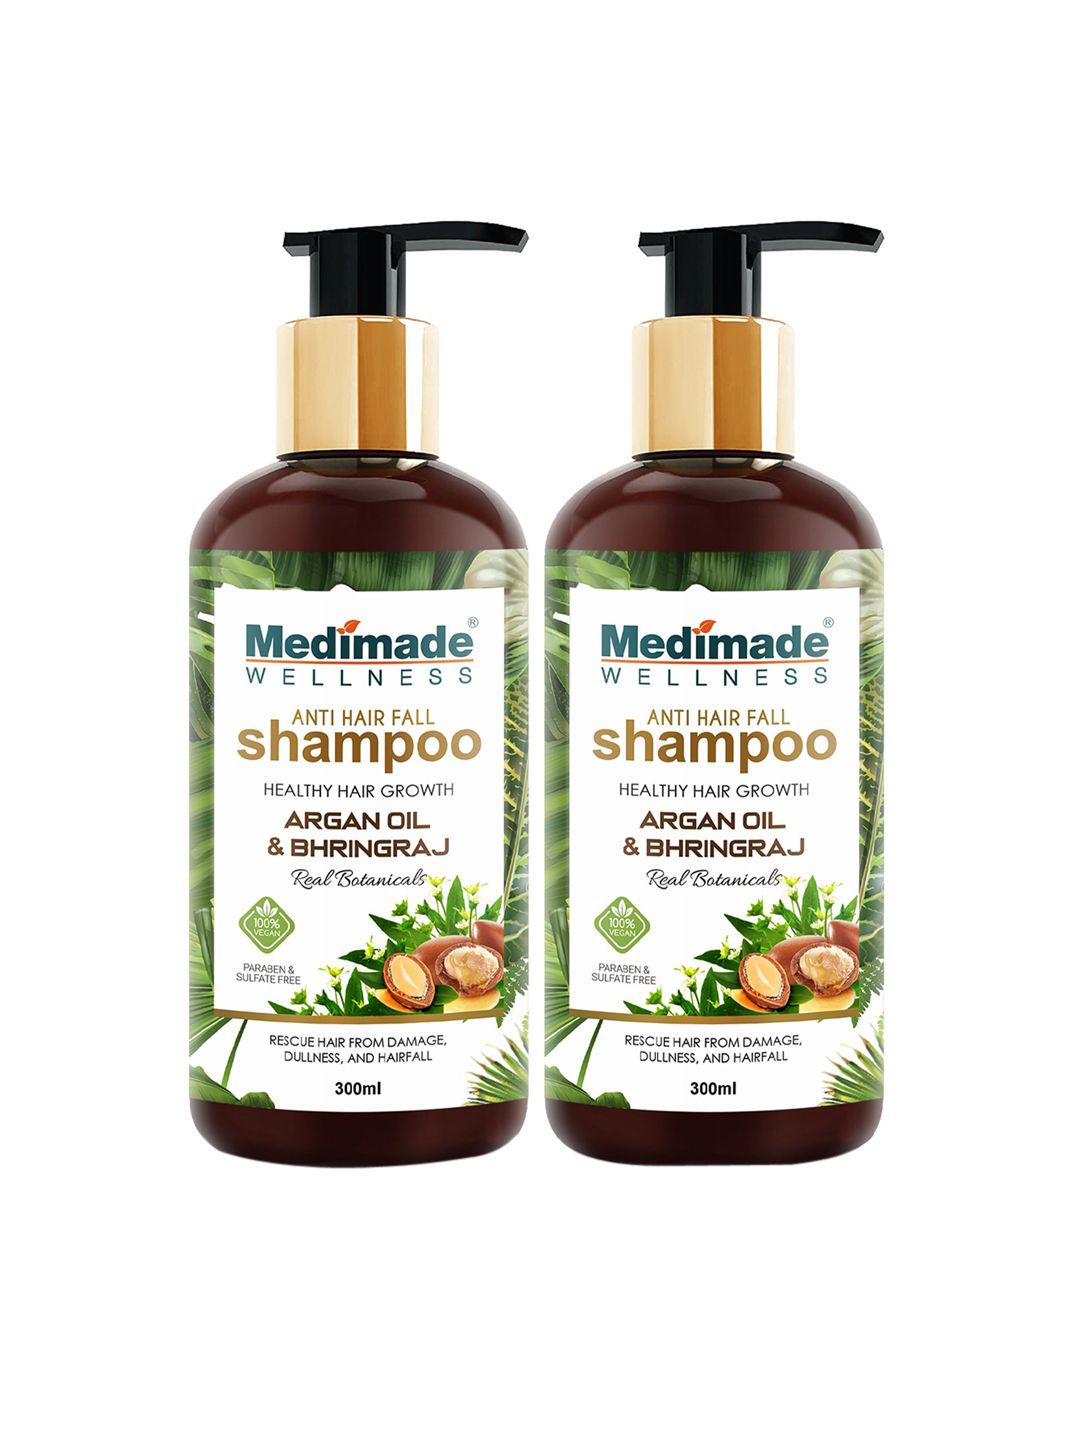 Medimade Set of 2 Anti-Hair Fall Shampoo with Argan Oil & Bhringraj - 300 ml each Price in India